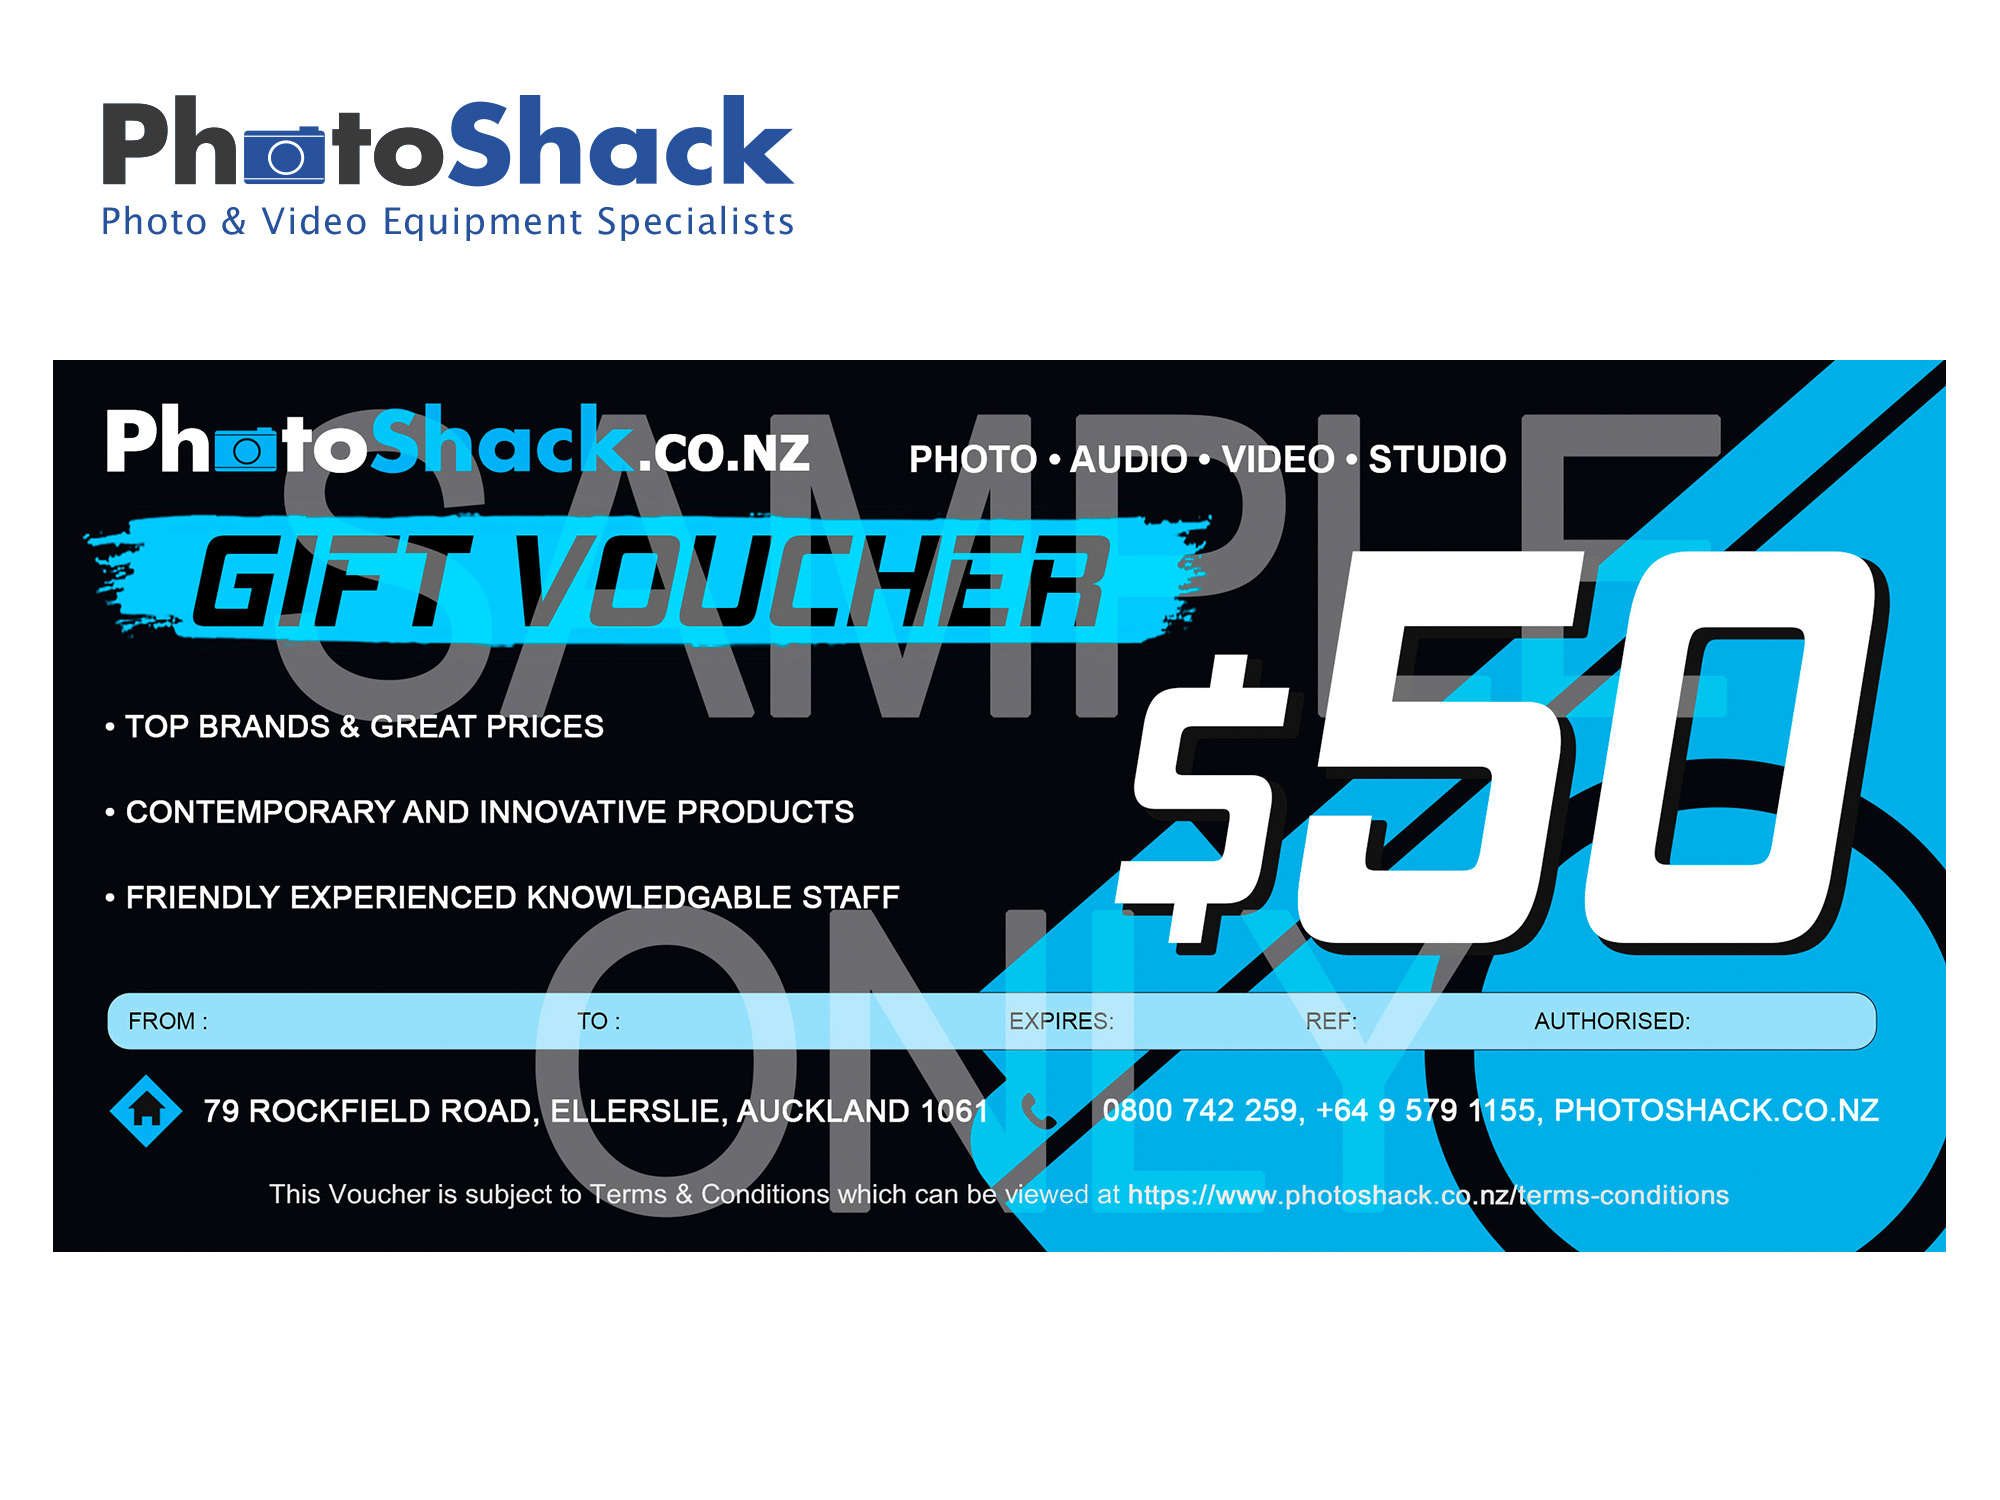 Photoshack Gift Voucher $50